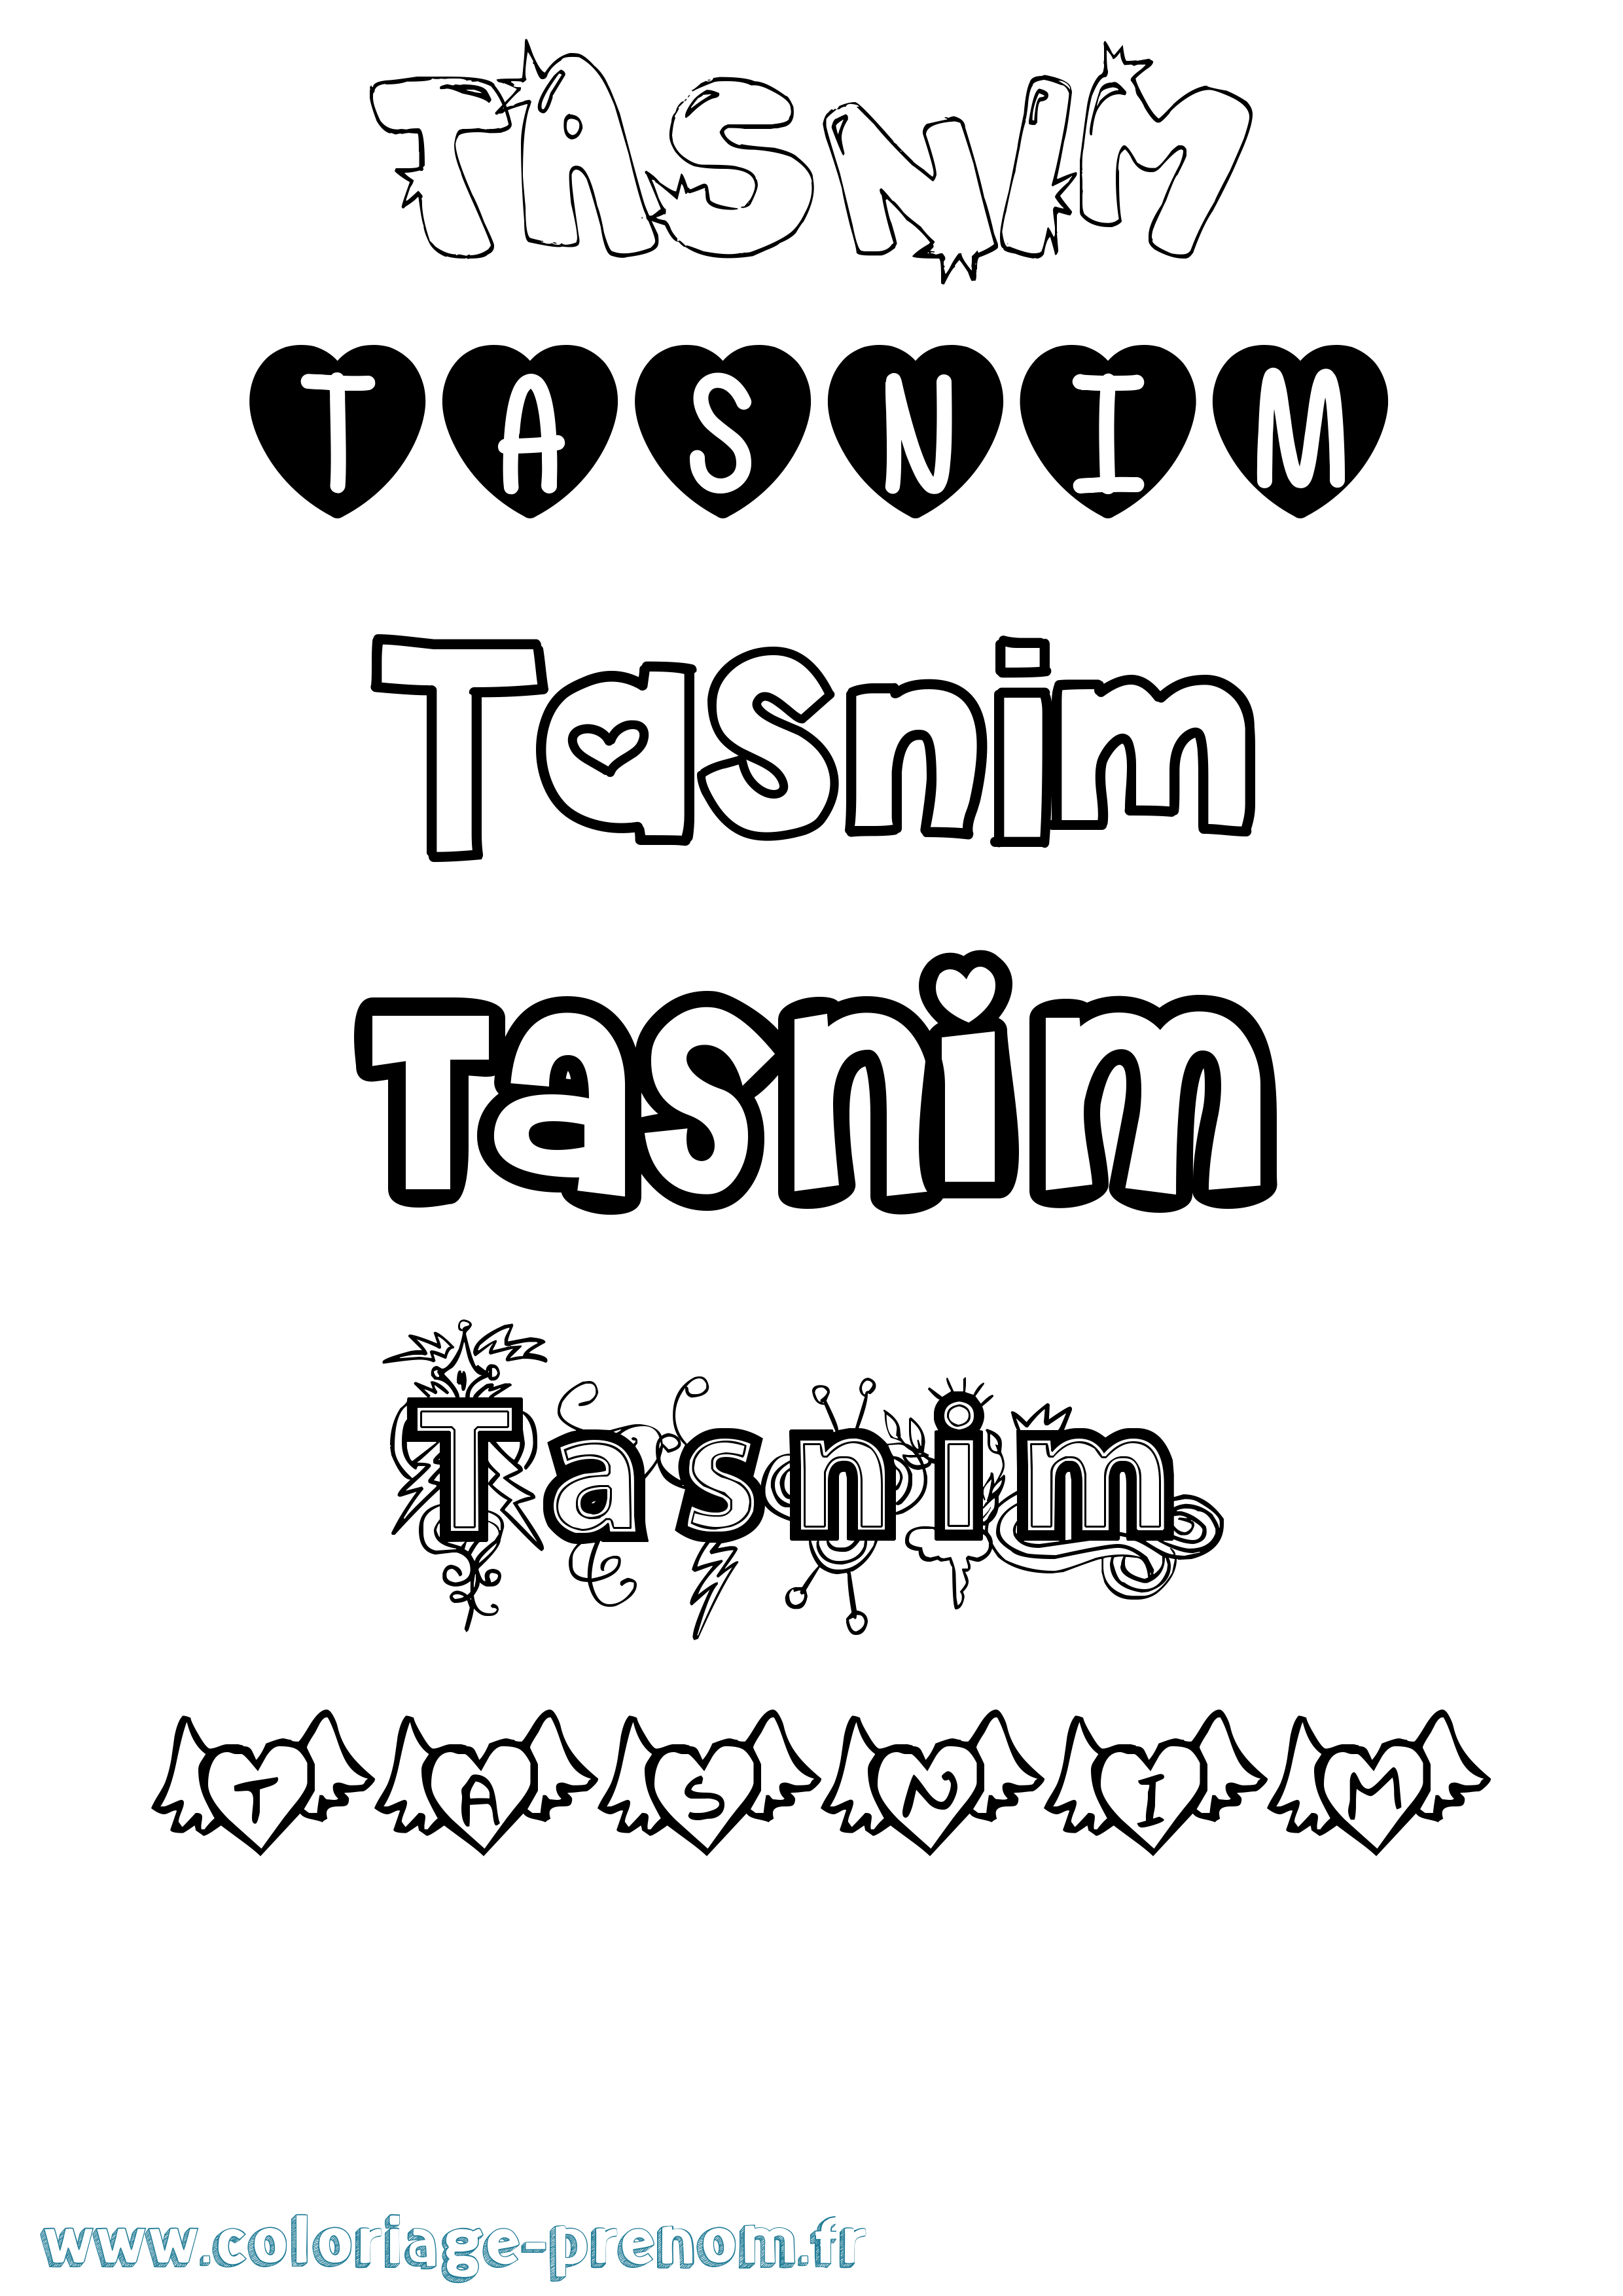 Coloriage prénom Tasnim